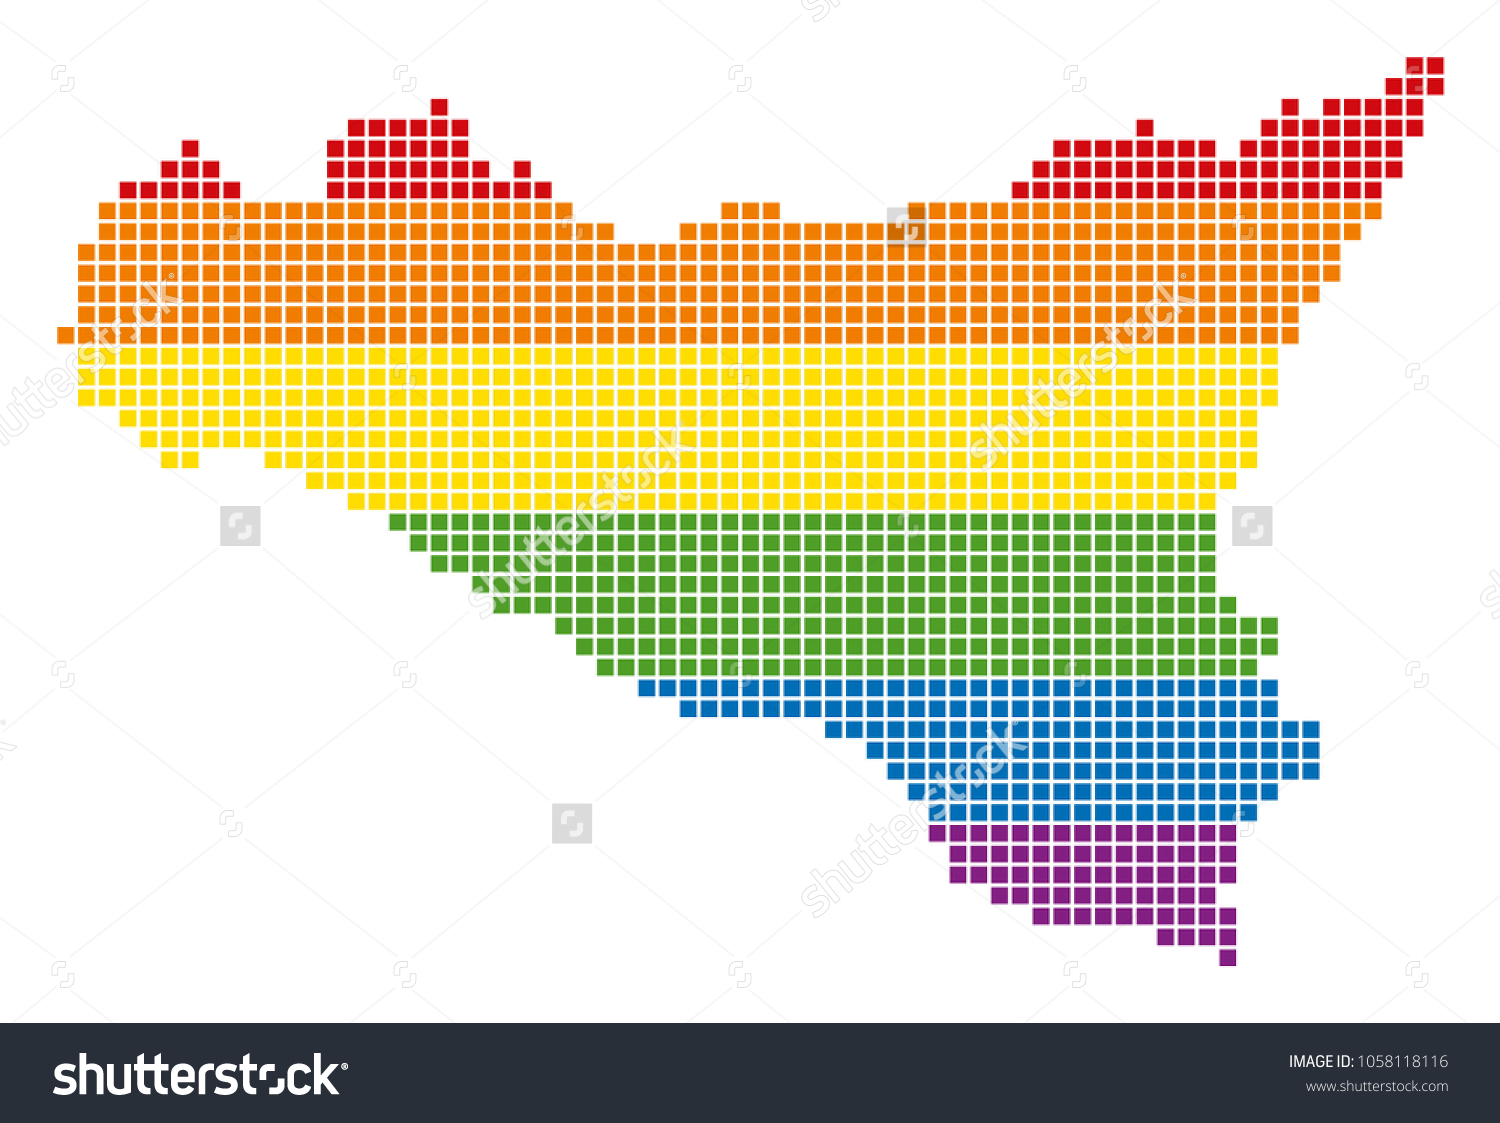 Pixel Lgbt Pride Sicilia Map Lesbians Stock Vector Royalty Free 1058118116 Shutterstock 8292